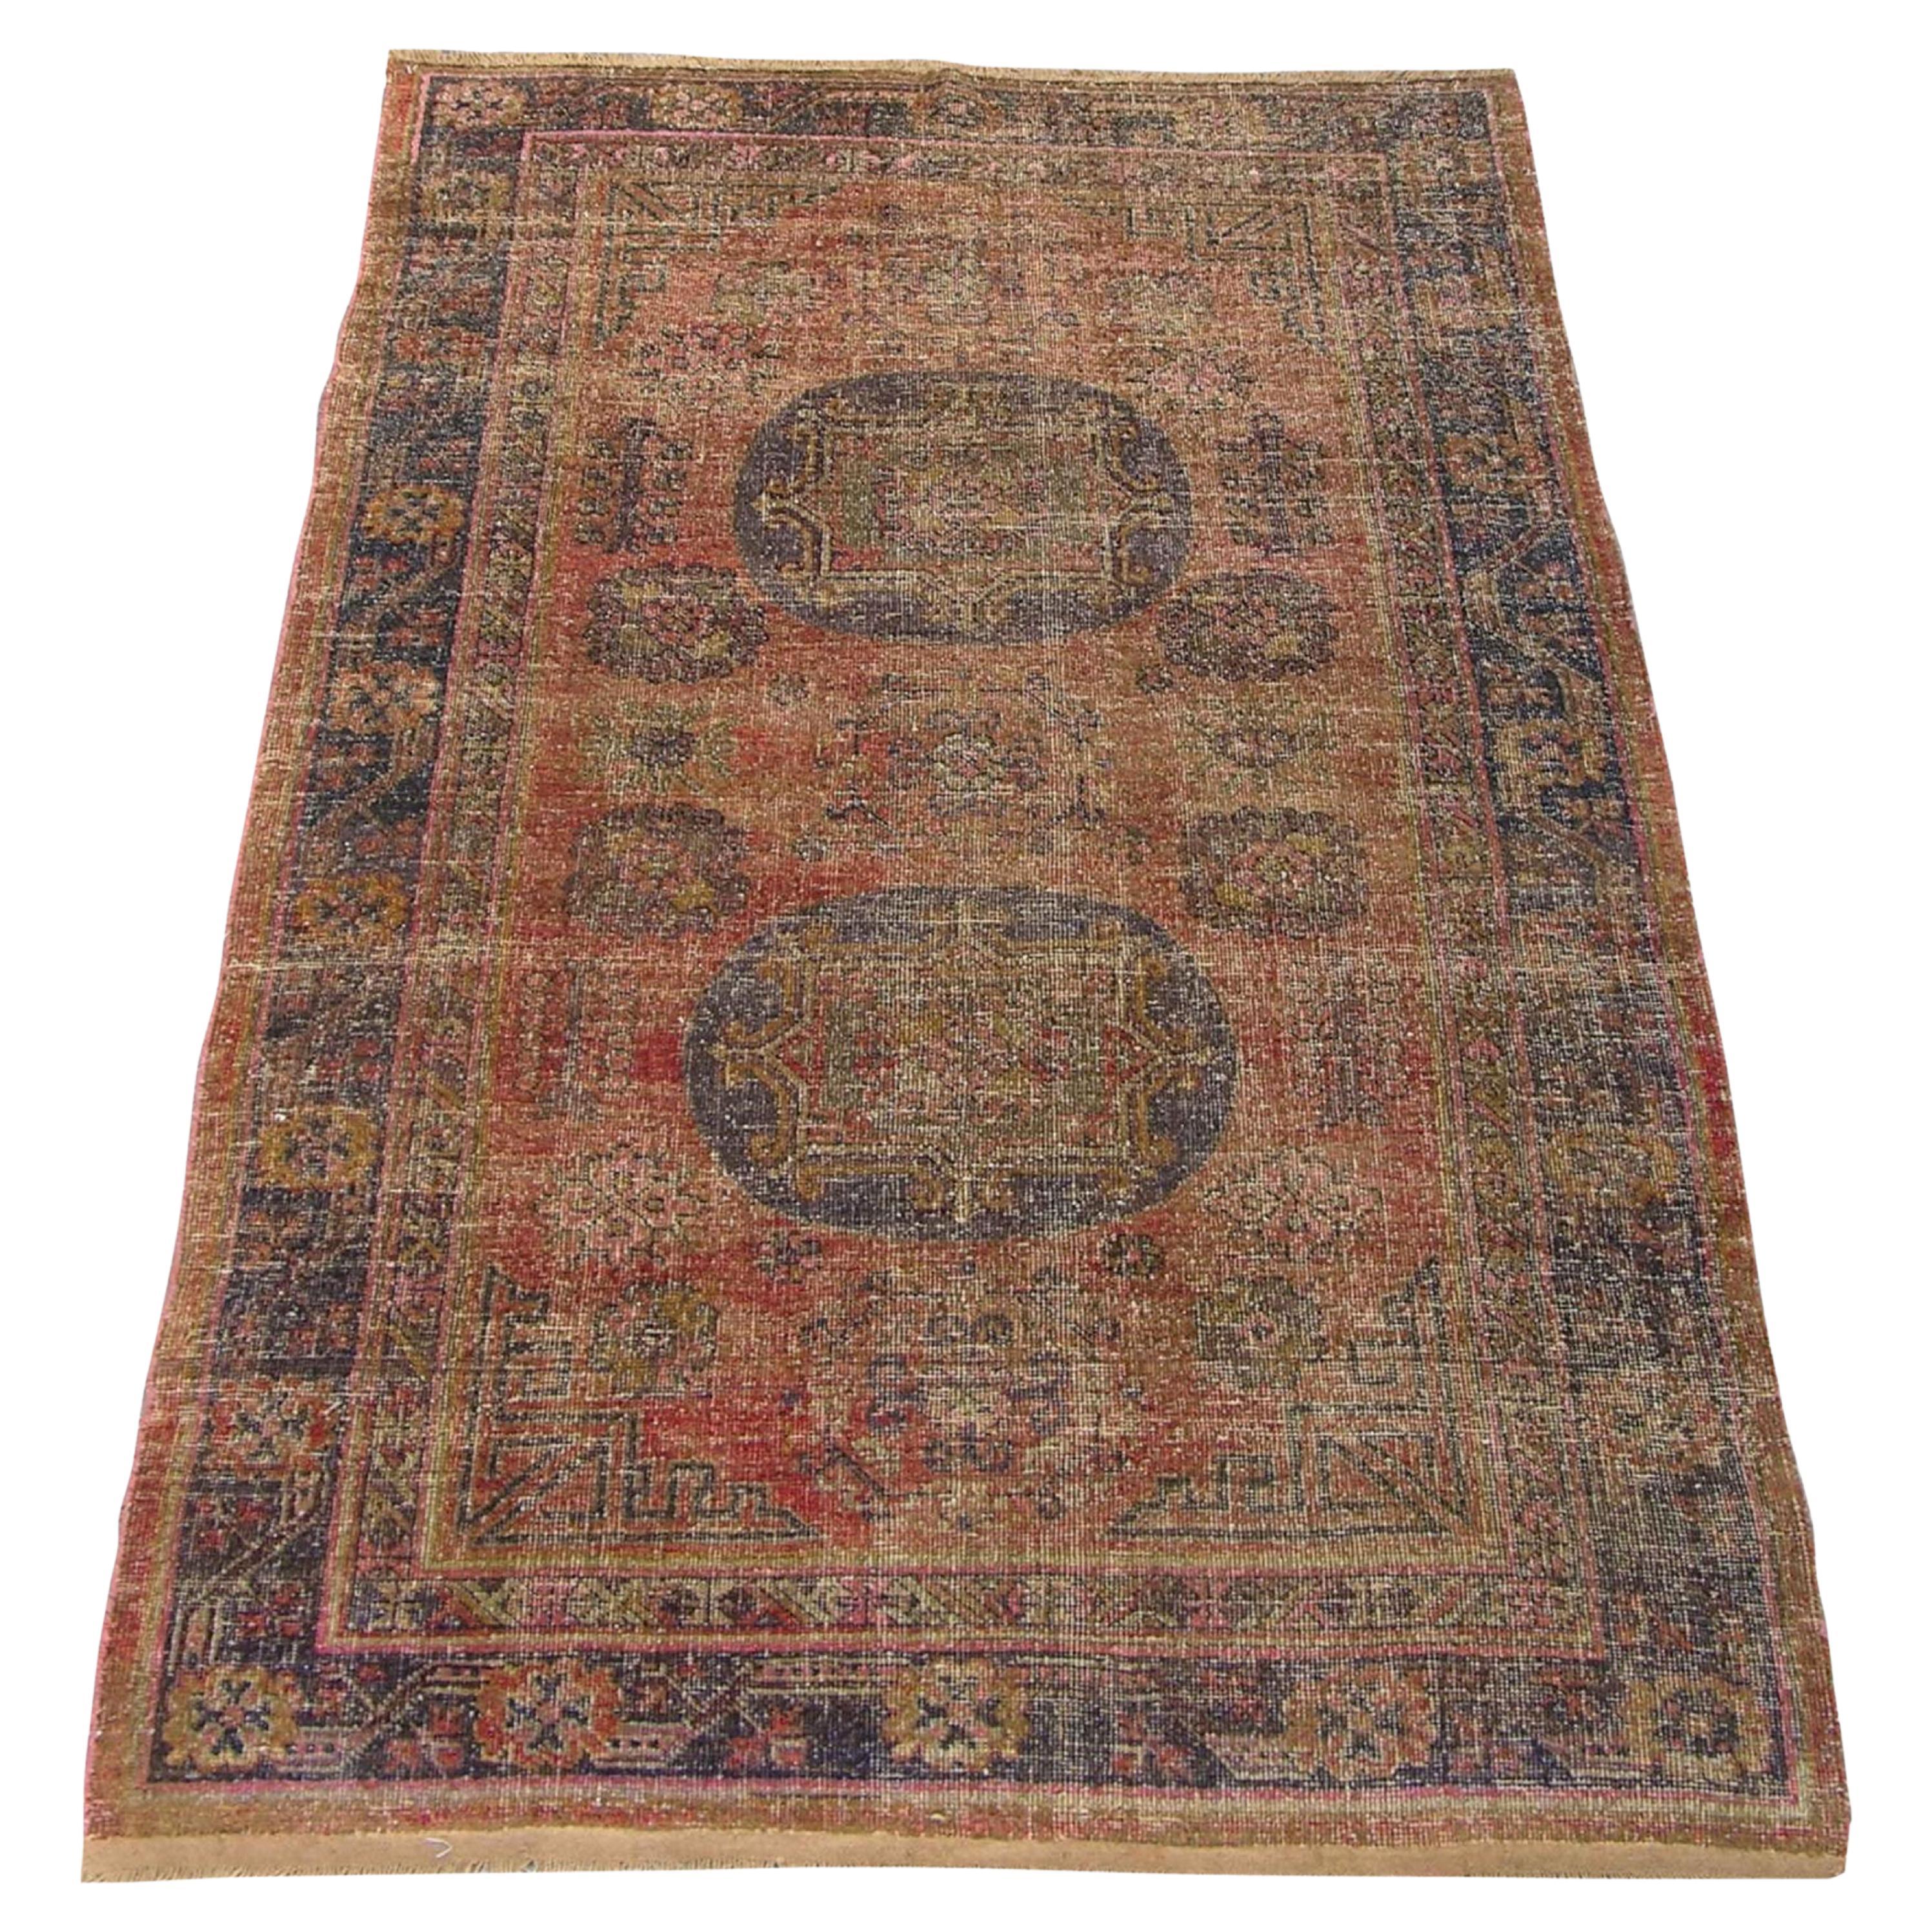 Late-19th Century Authentic Khotan Samarkand Rug For Sale